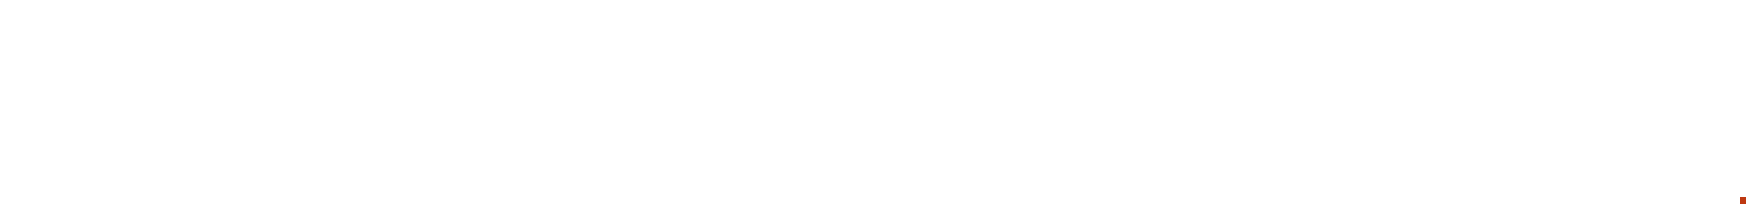 Menna Development & Management Inc.